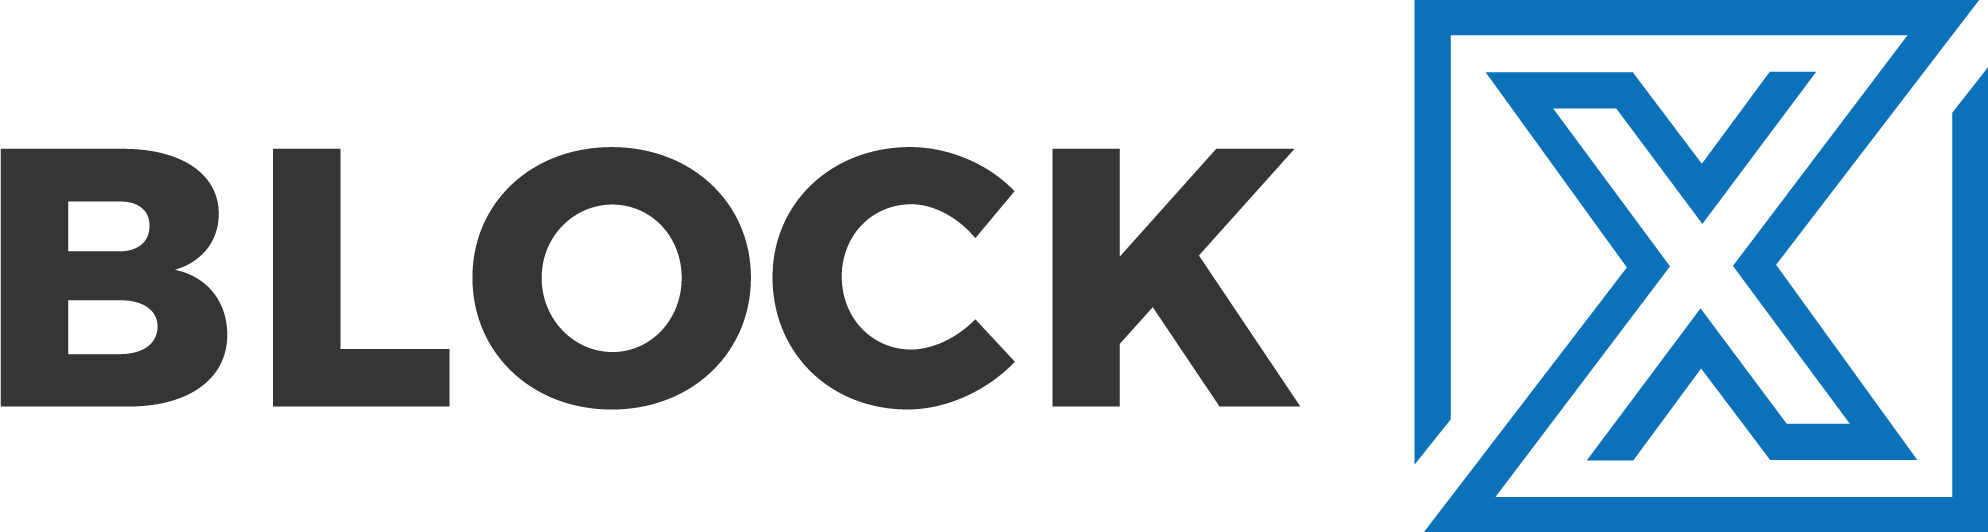 block-x-logo.png